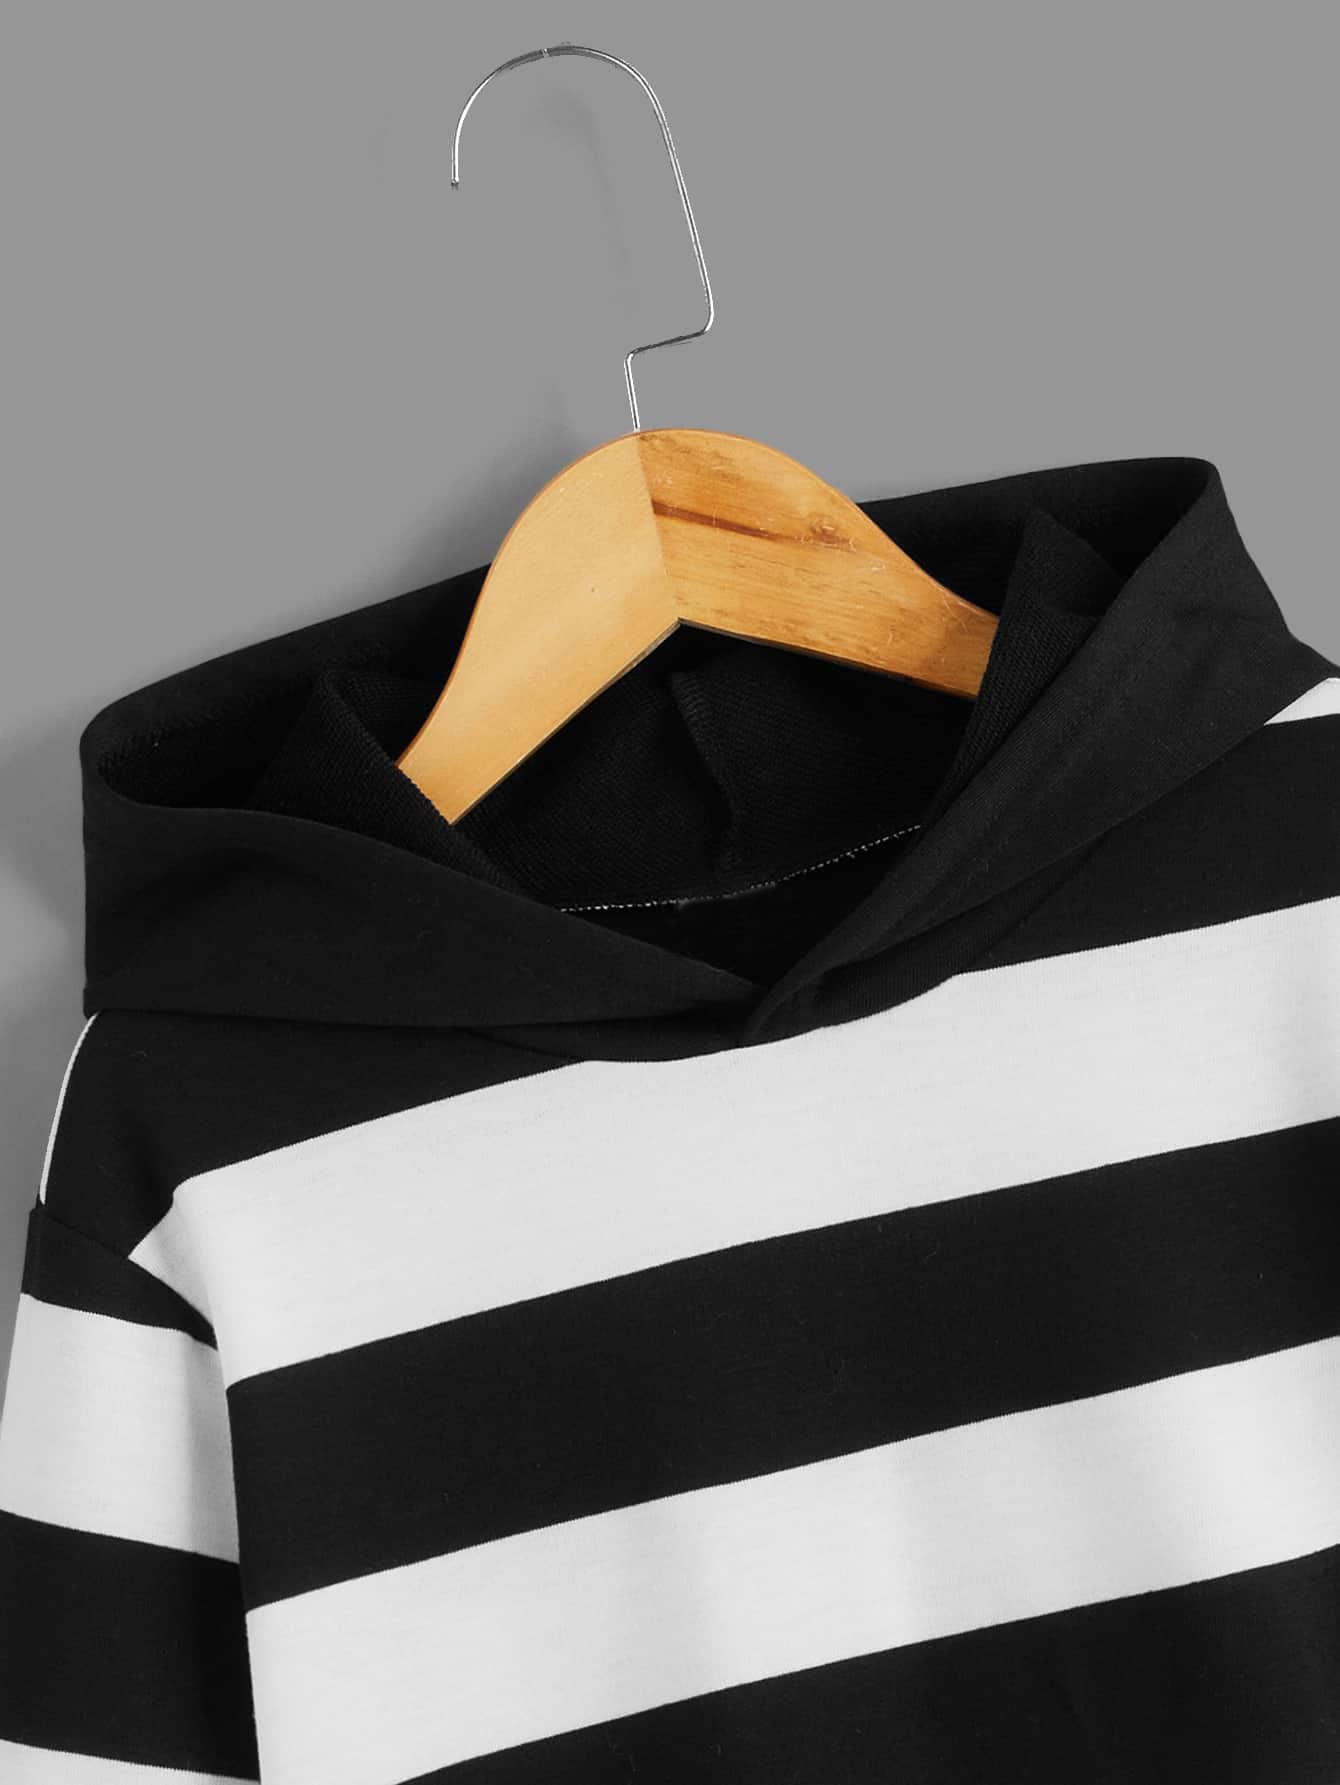 SHENHE Boy's Striped Color Block Long Sleeve Hooded Sweatshirt Hoodie Tops with Pocket